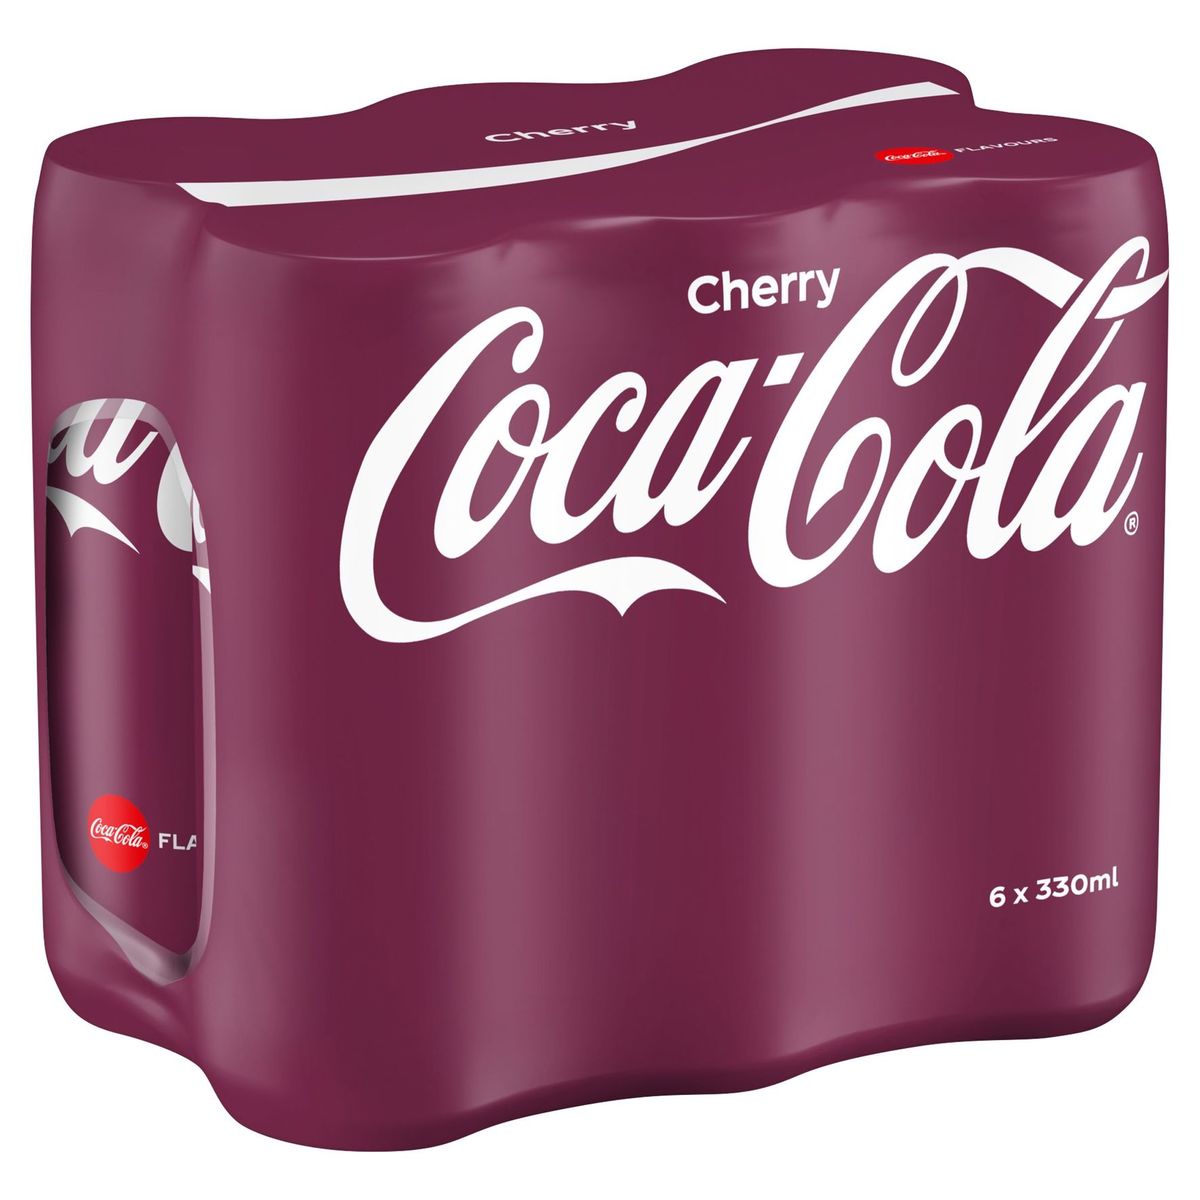 Coca-Cola Cherry Coke Soft Drink 6 x 330 ml